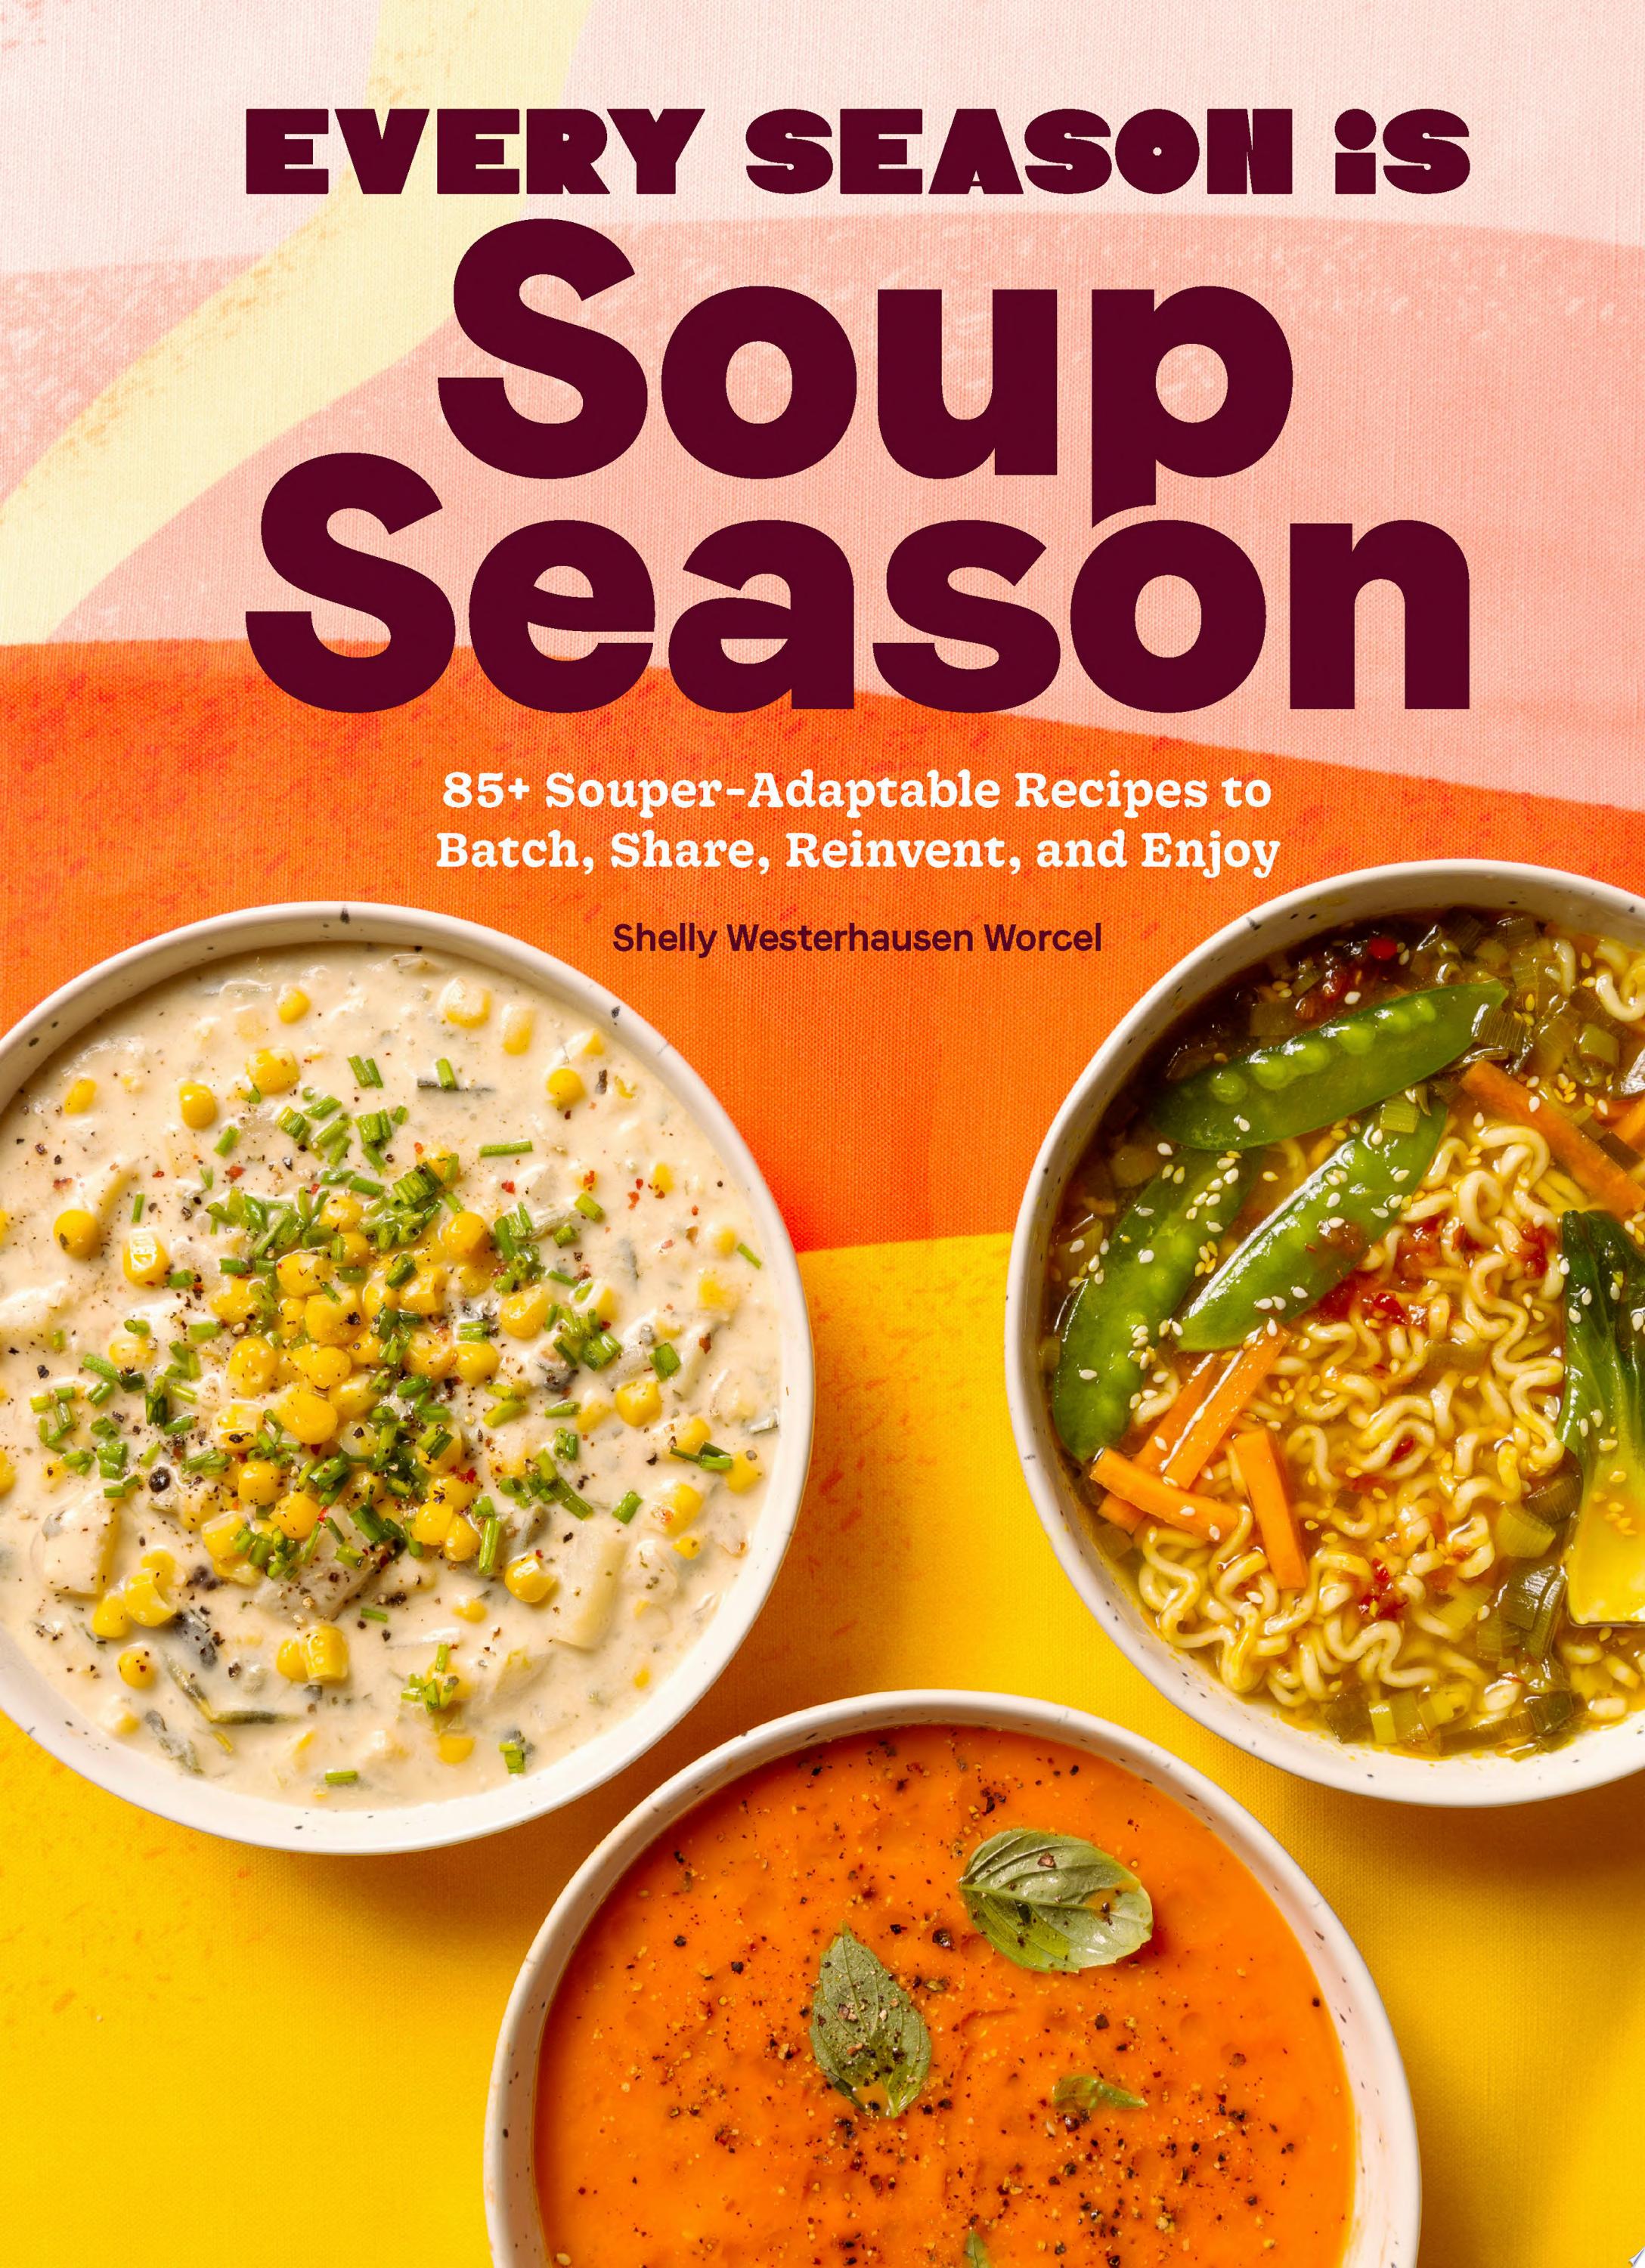 Image for "Every Season Is Soup Season"